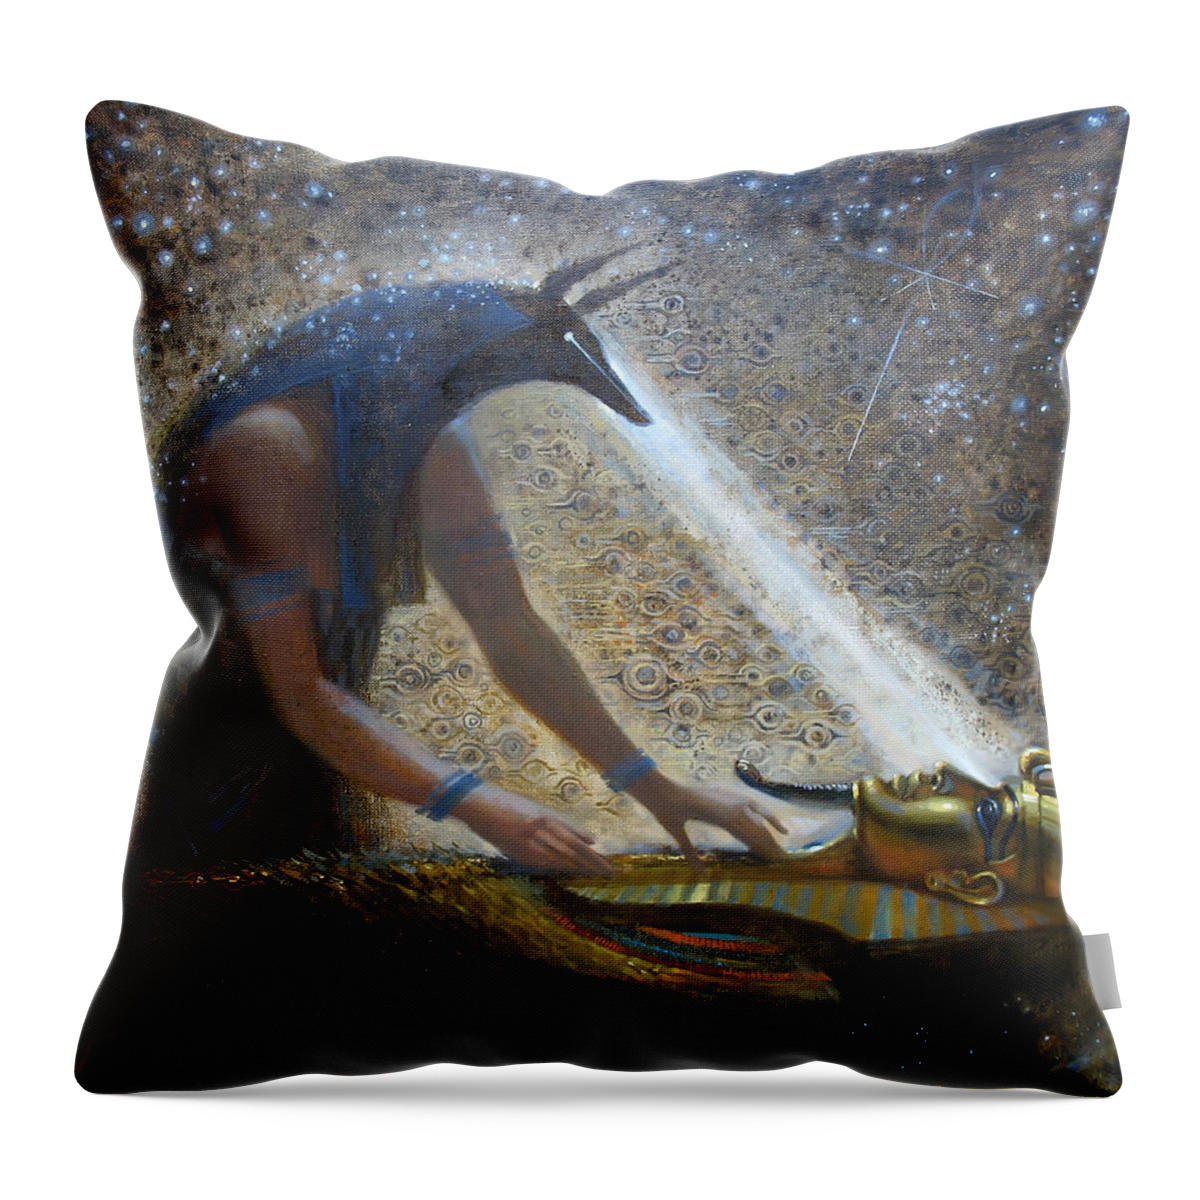 Egypt Throw Pillow featuring the painting Wake Up by Valentina Kondrashova